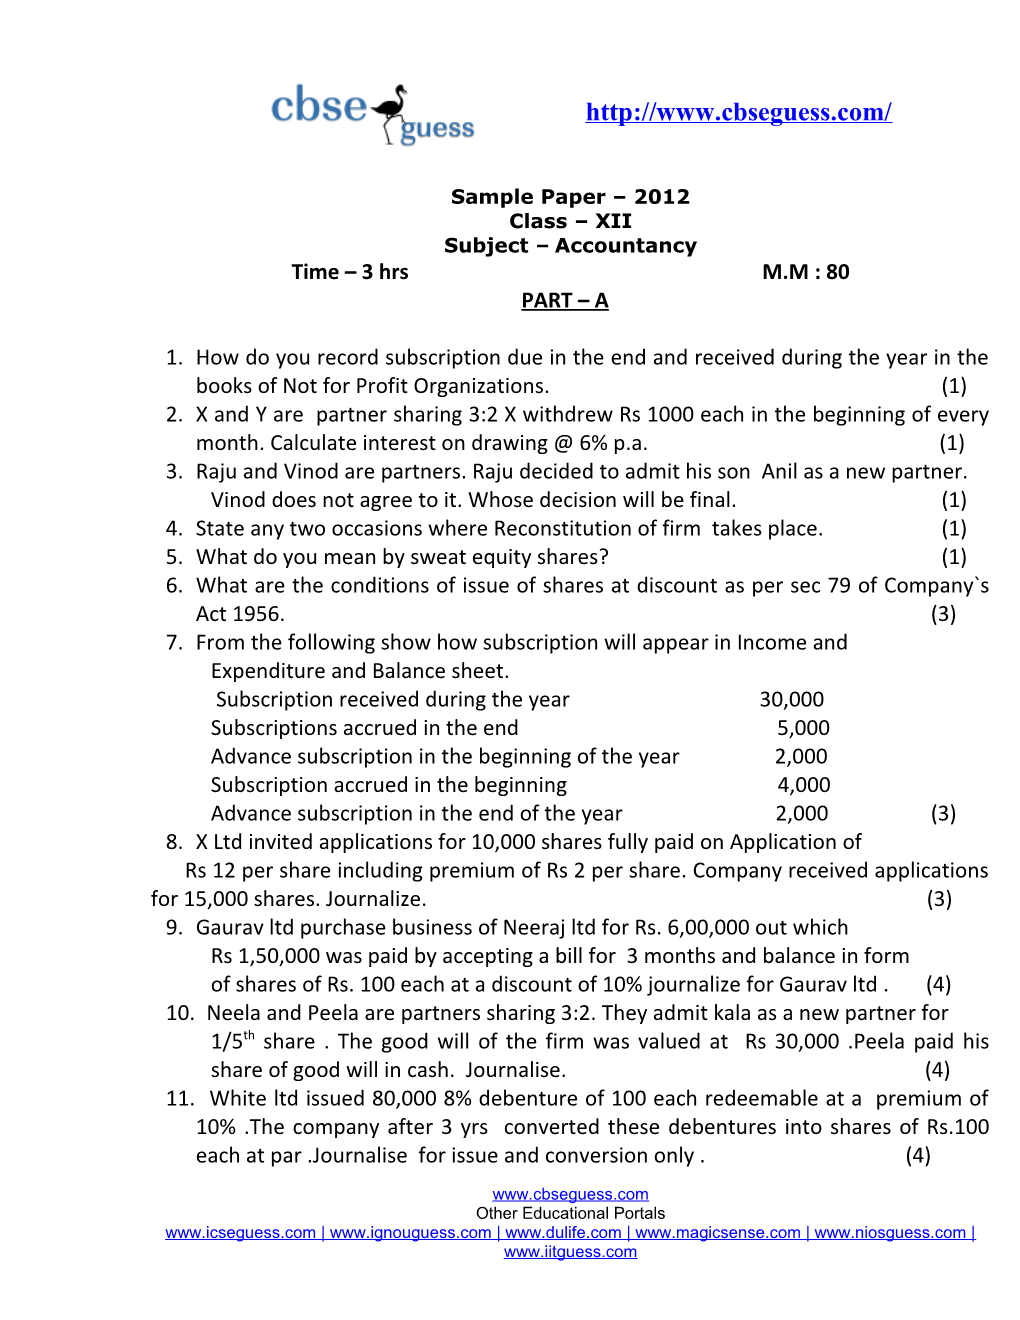 Sample Paper 2012 Class XII Subject Accountancy